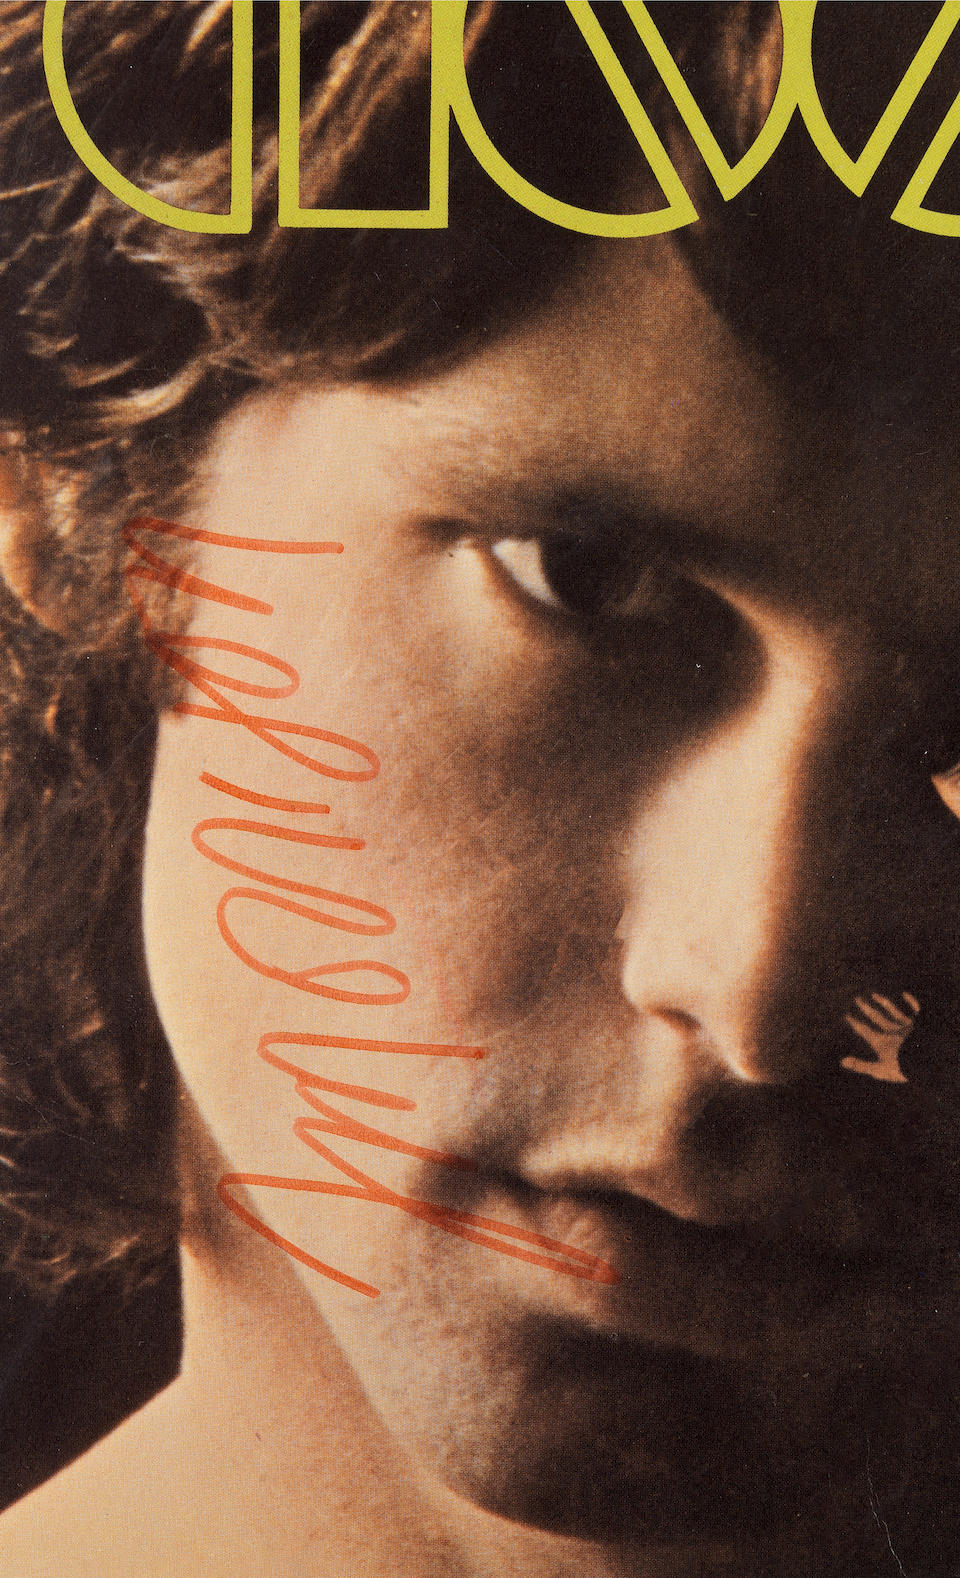 The Doors: An Autographed Copy of The Album The Doors,